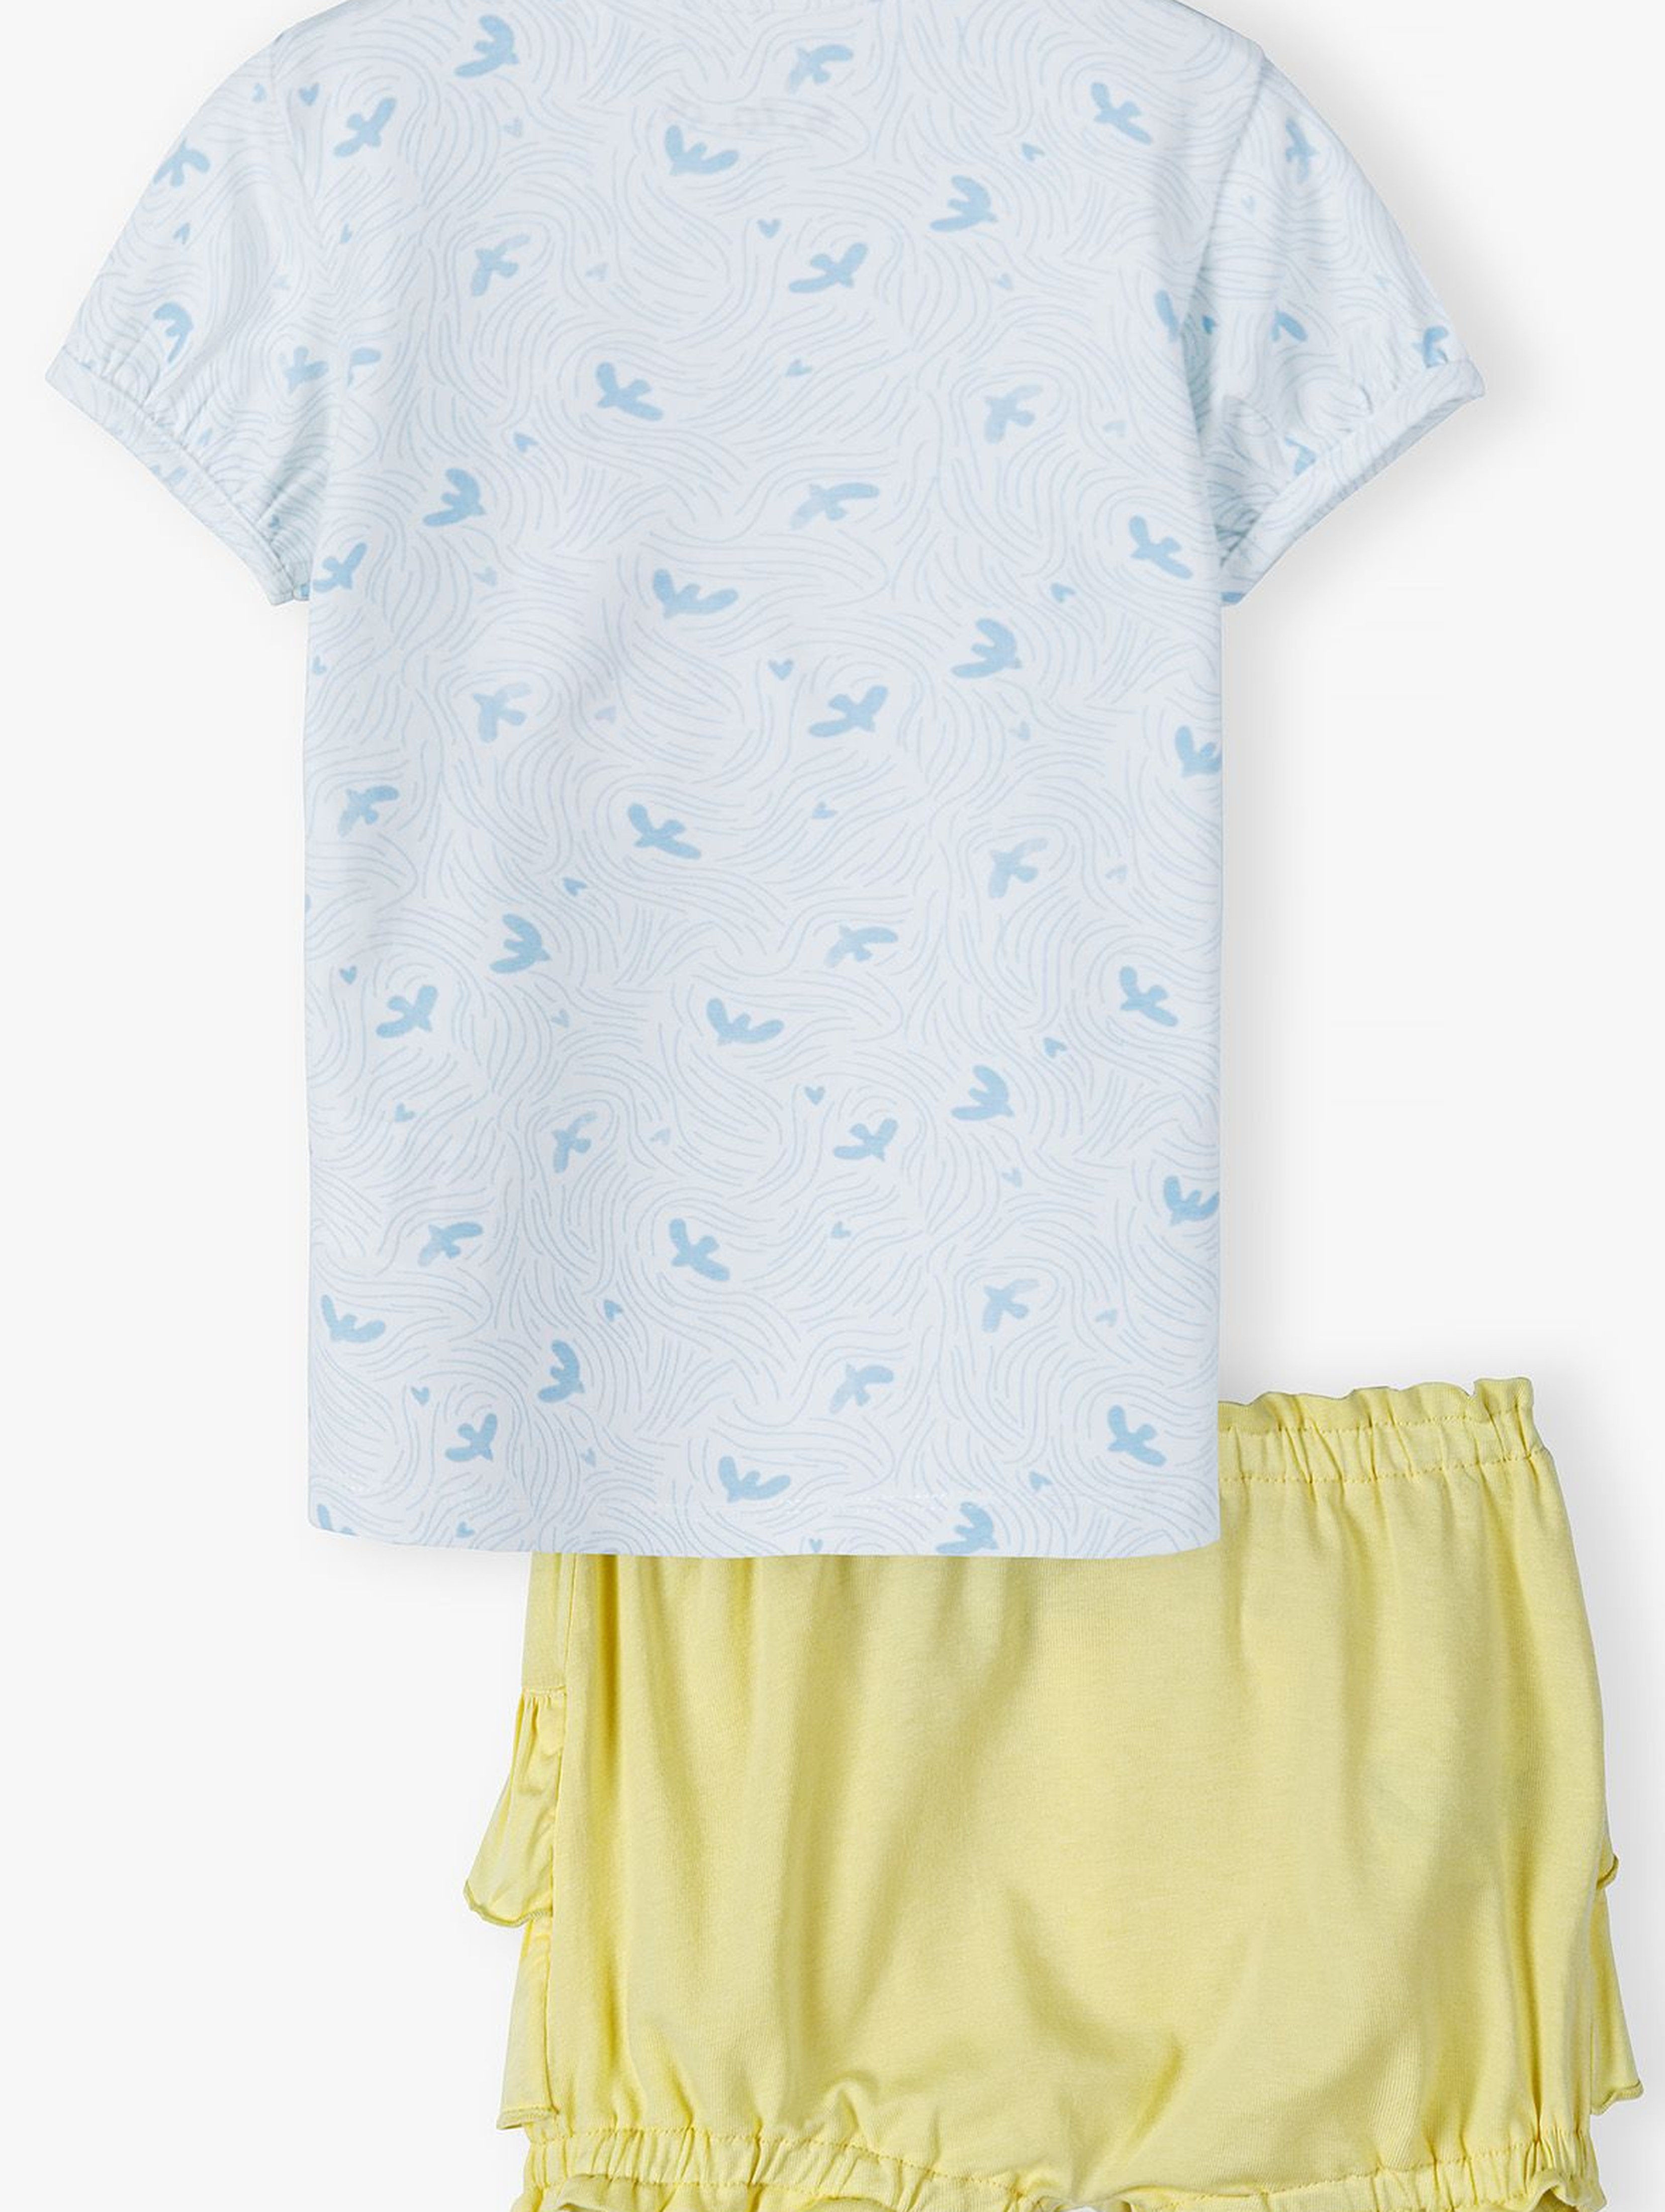 Kolorowy komplet – tshirt i spodenki dla niemowlaka